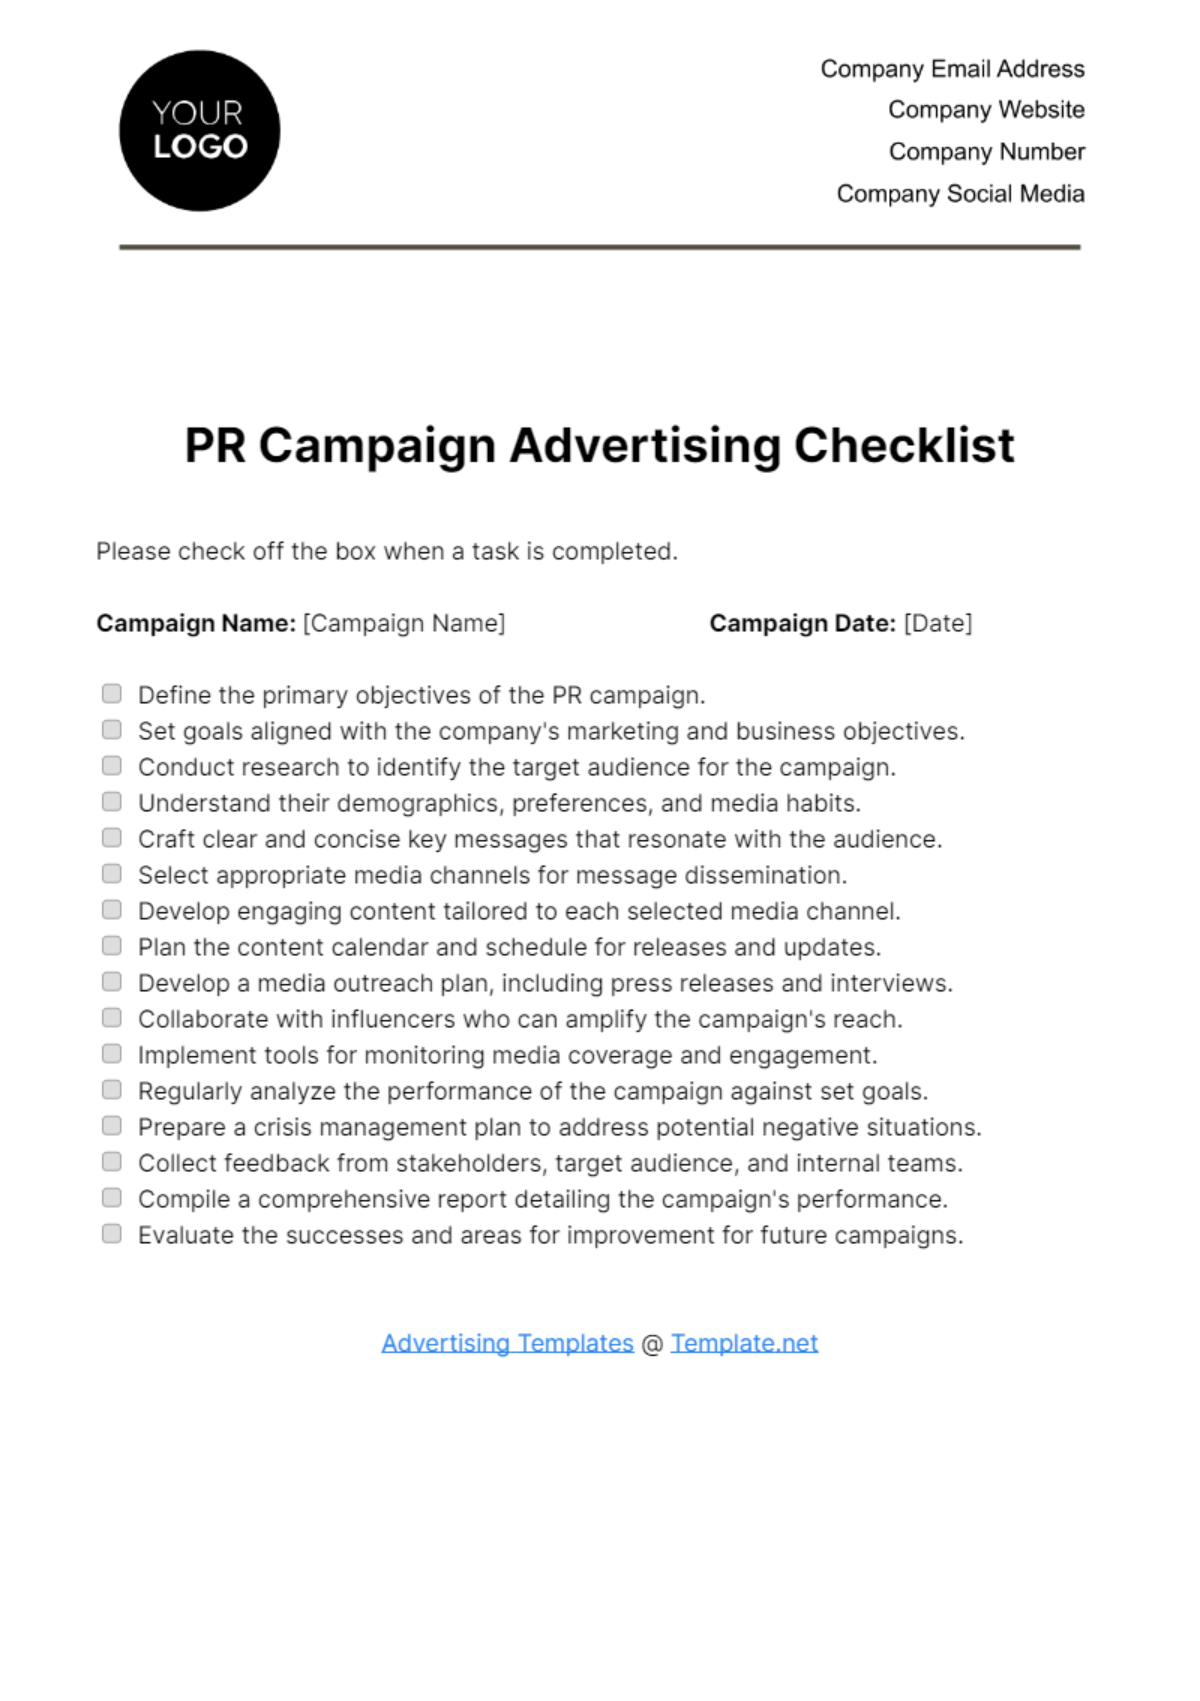 Free PR Campaign Advertising Checklist Template